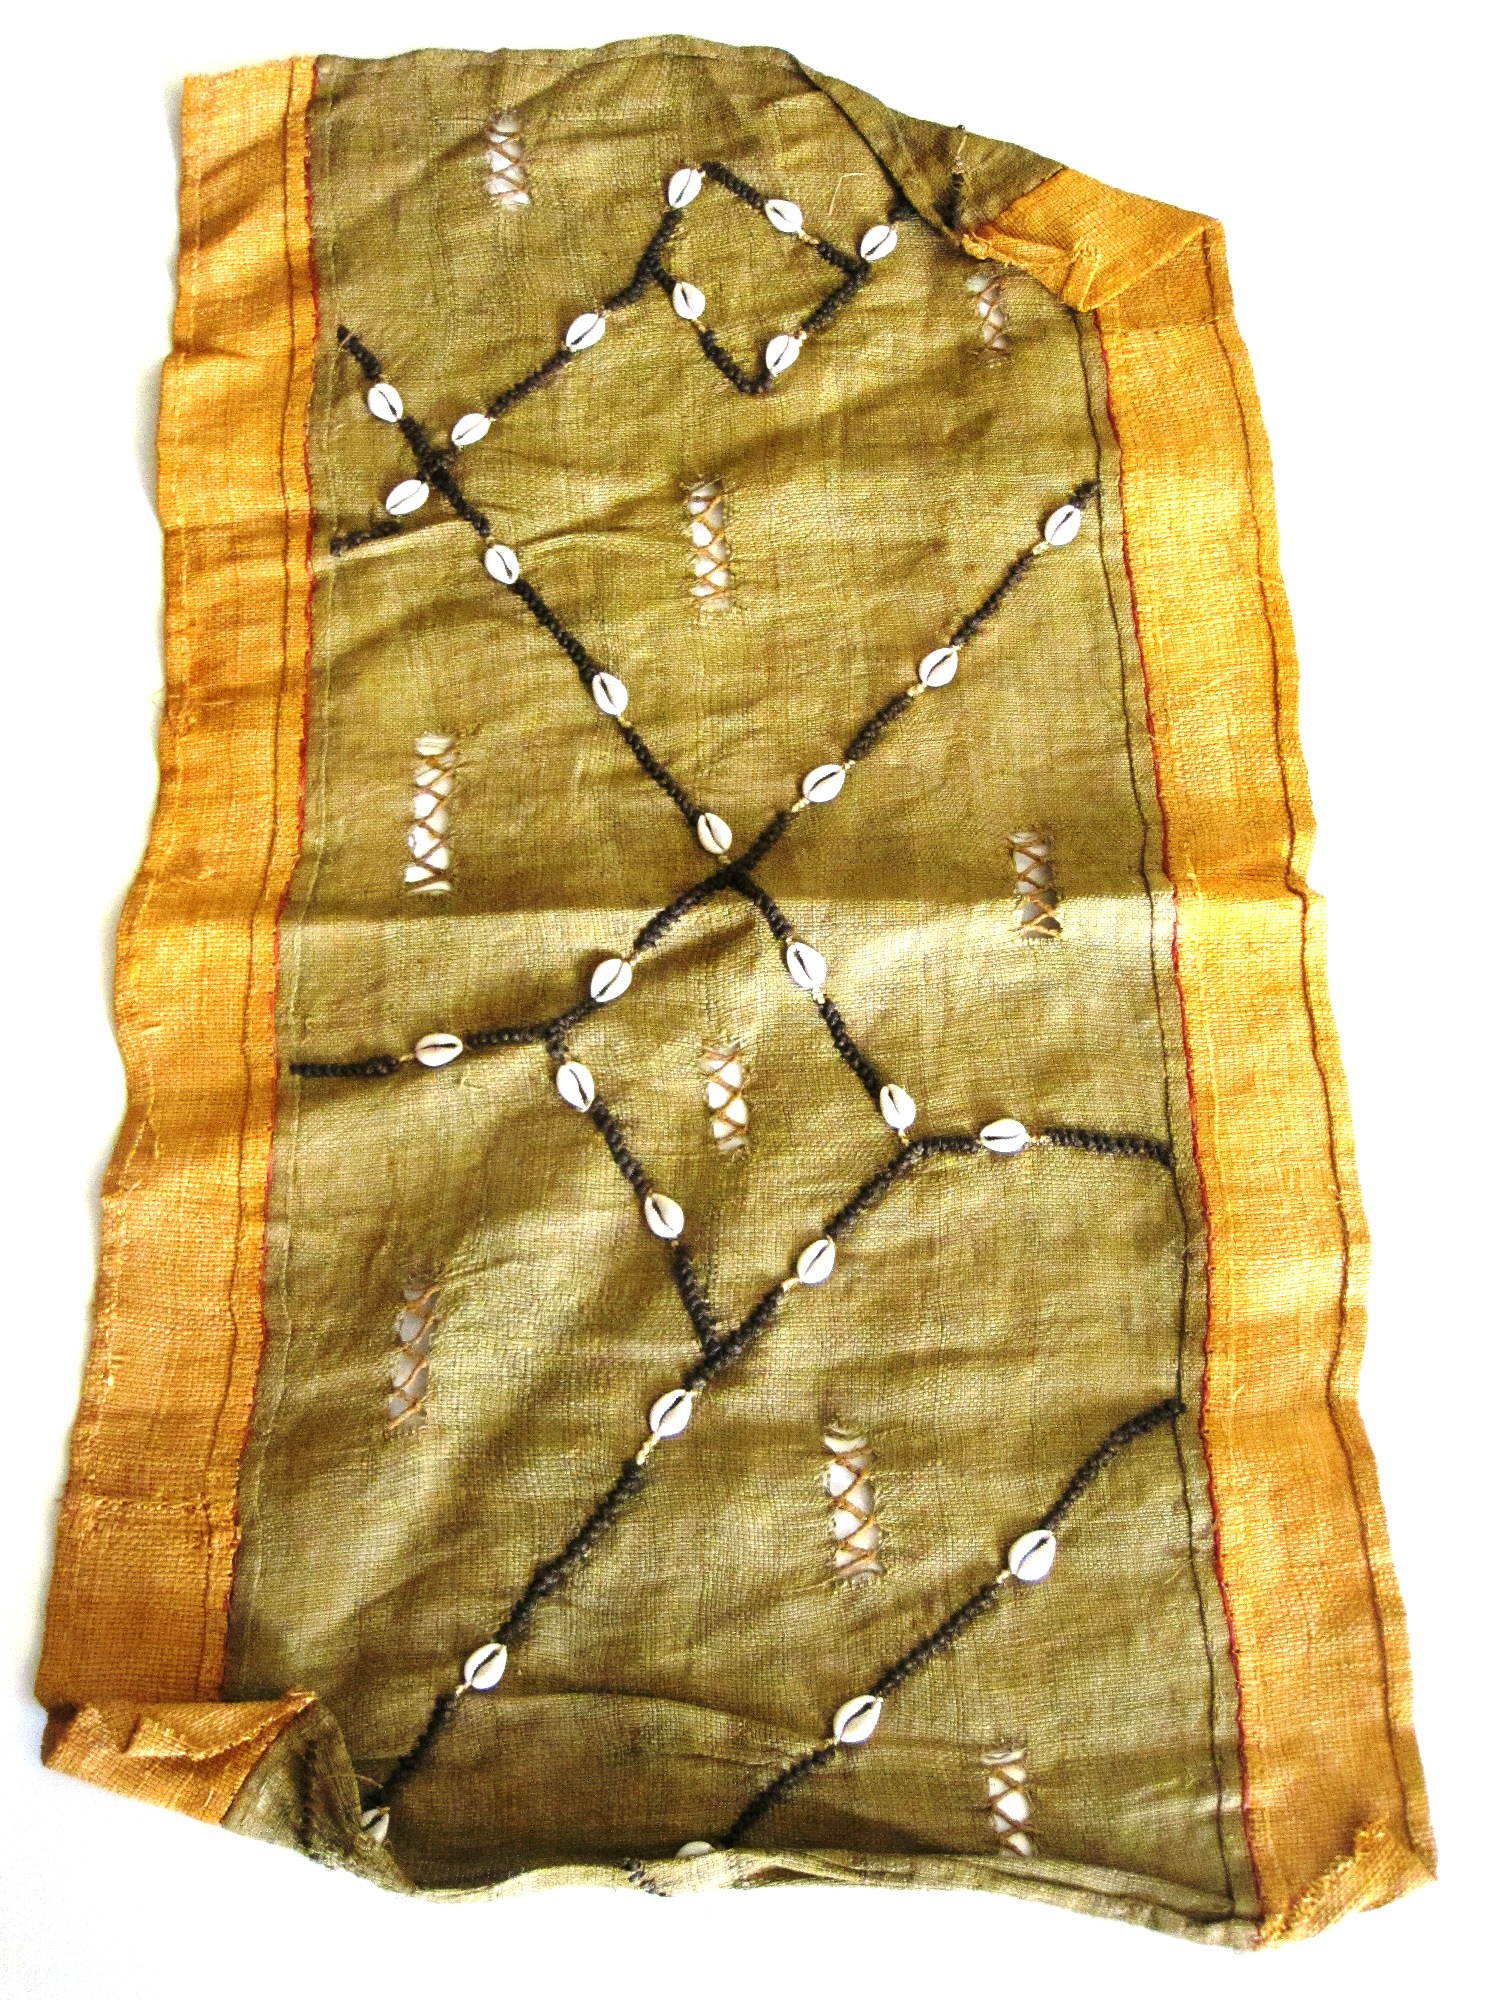 Kuba Cloth textile Strip #009